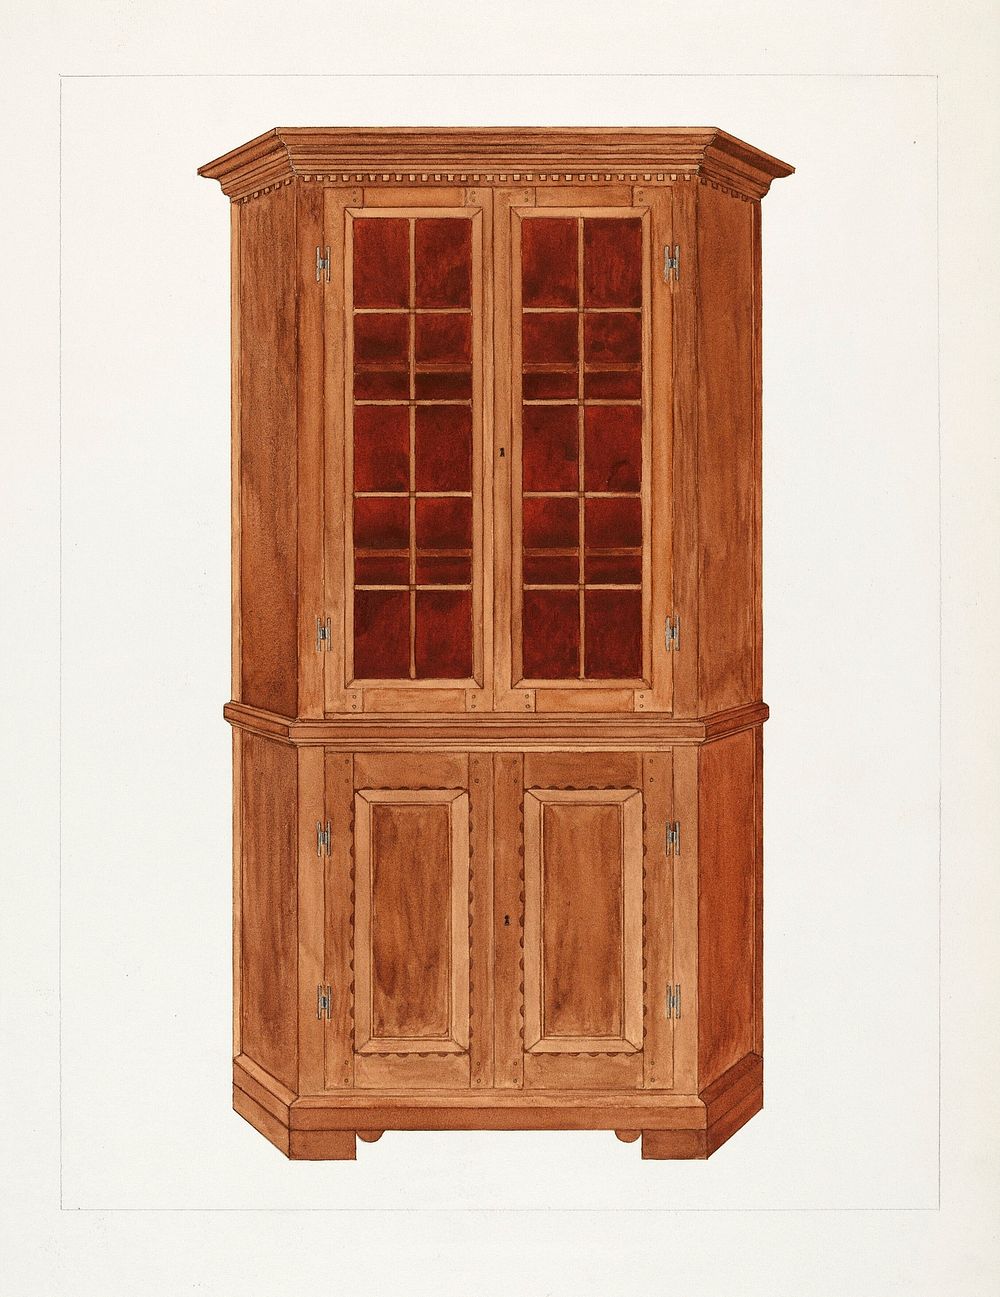 Corner Cupboard (c. 1937) by George Fairbanks. Original from The National Gallery of Art. Digitally enhanced by rawpixel.